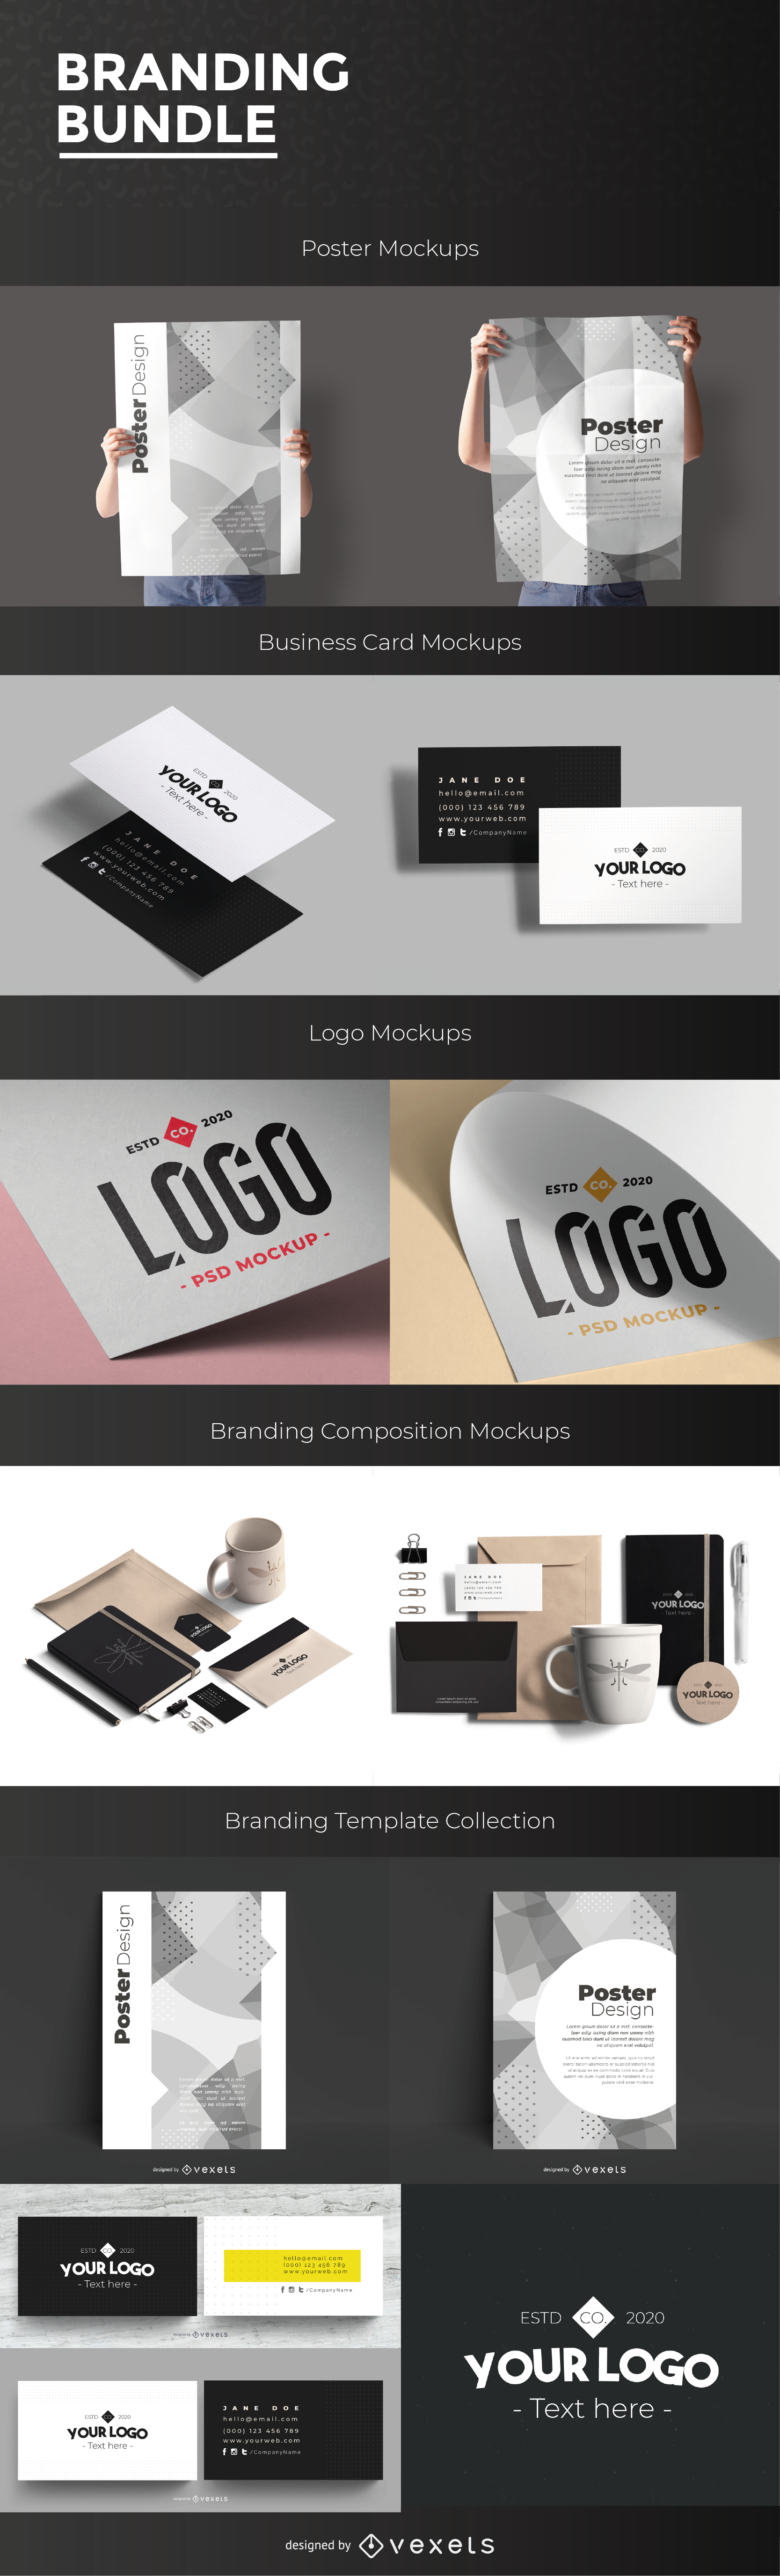 Download Freebie Branding Mockup Template Bundle Logos Cards Posters